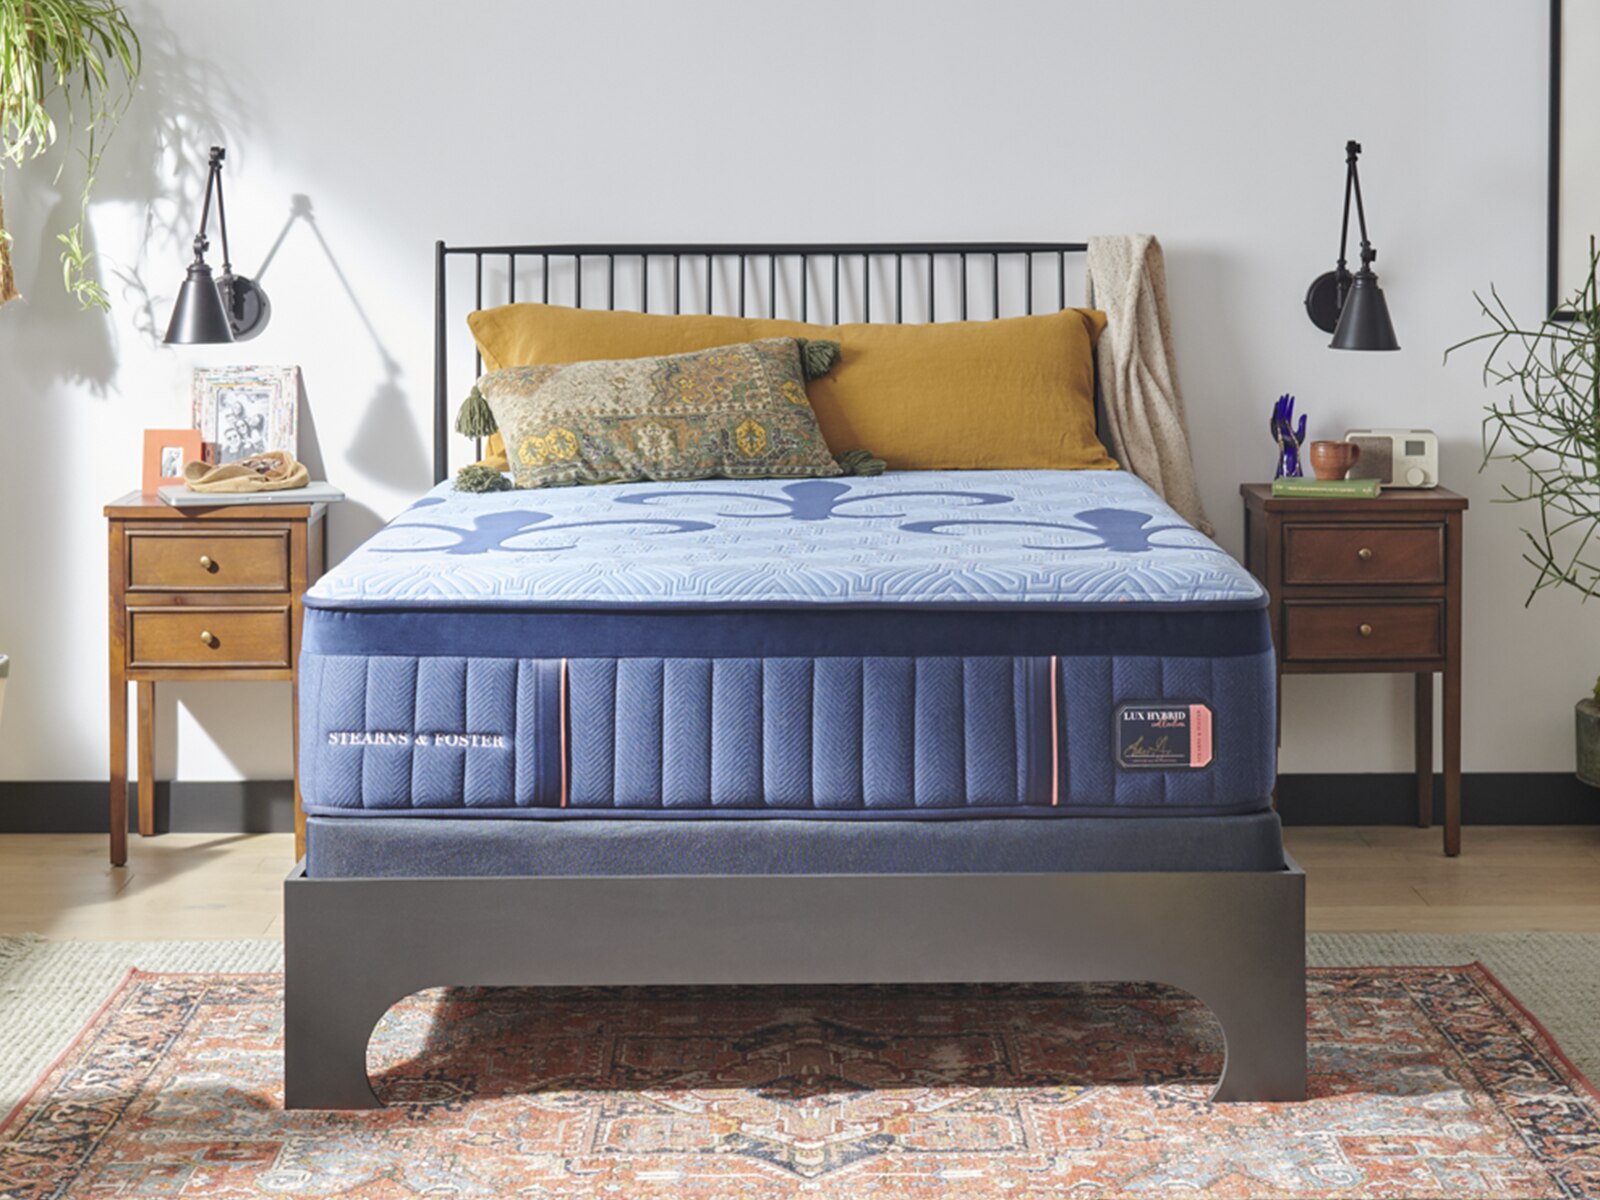 stearns & foster lux hybrid 14.5 plush mattress